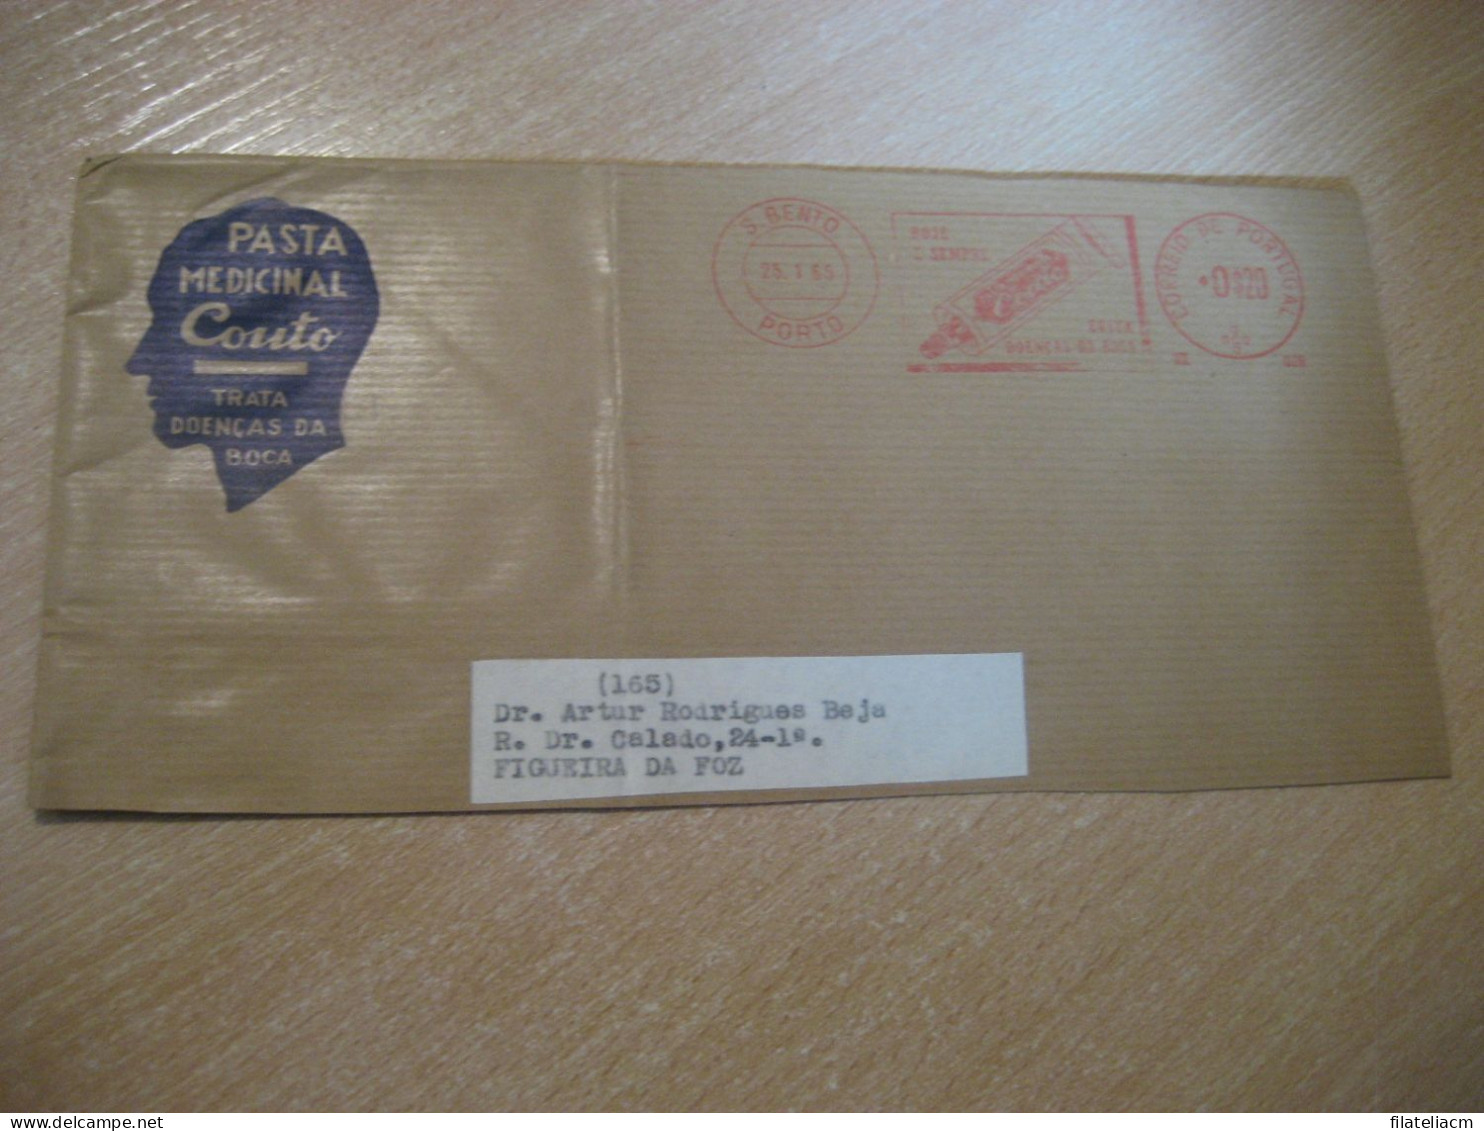 PORTO 1965 T Figueira Da Foz Pasta Medicinal COUTO Boca Pharmacy Health Sante Meter Mail Cancel Cut Cuted Cover PORTUGAL - Briefe U. Dokumente